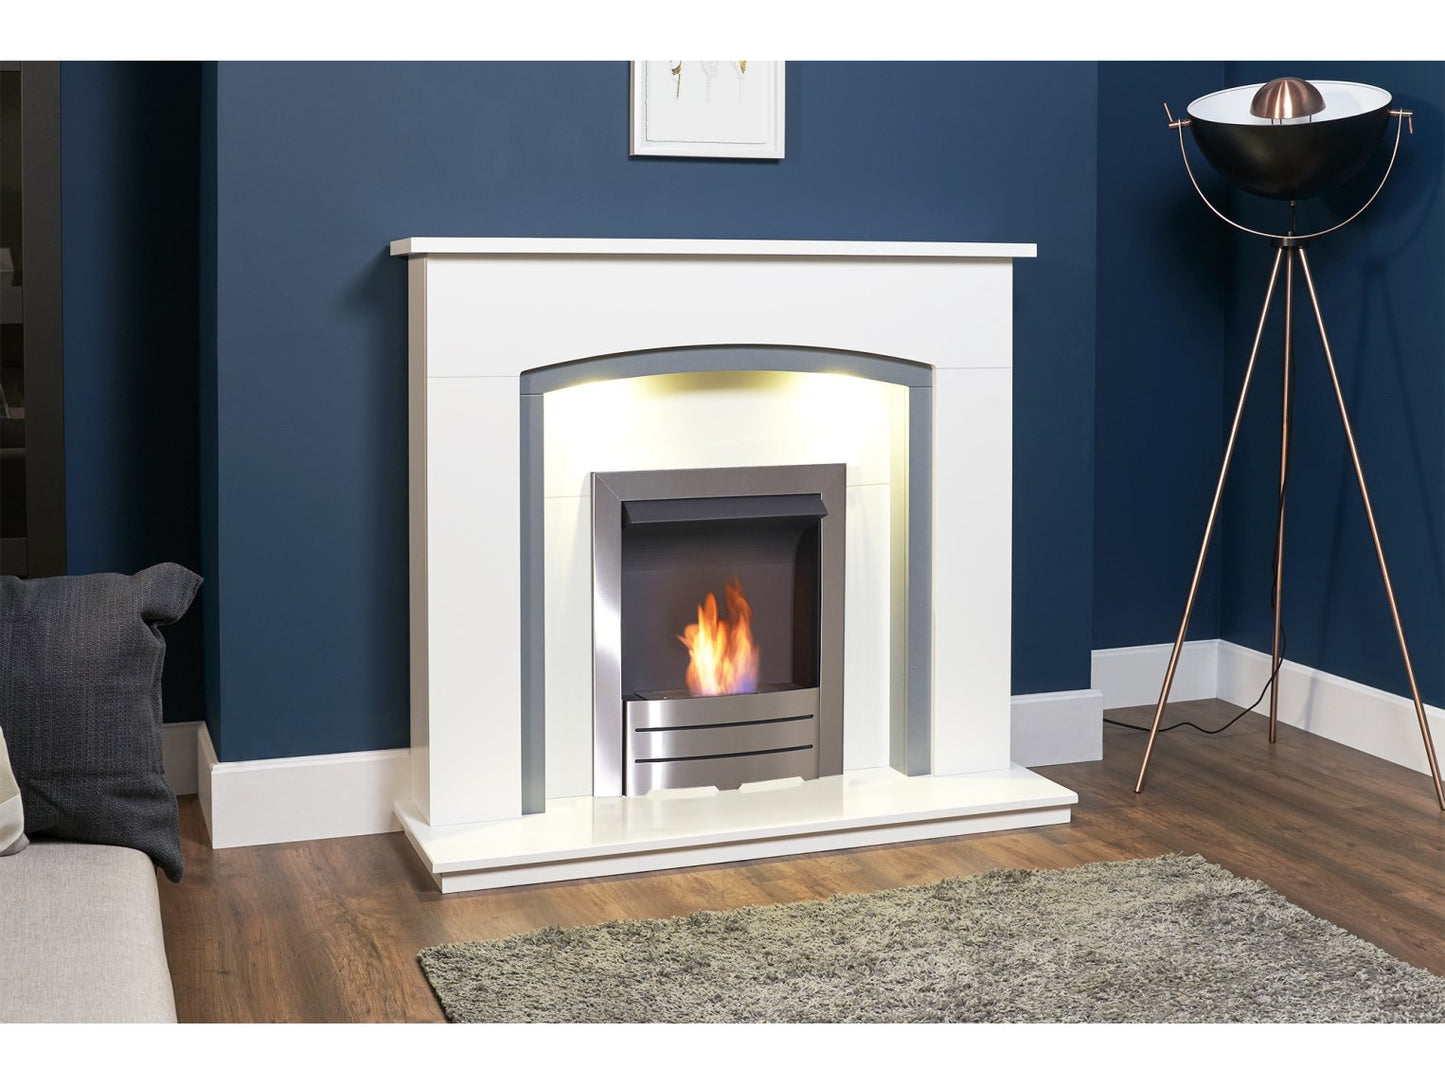 Adam Savanna Fireplace Pure White & Grey + Colorado Bio Ethanol Fire Brushed Steel, 48"